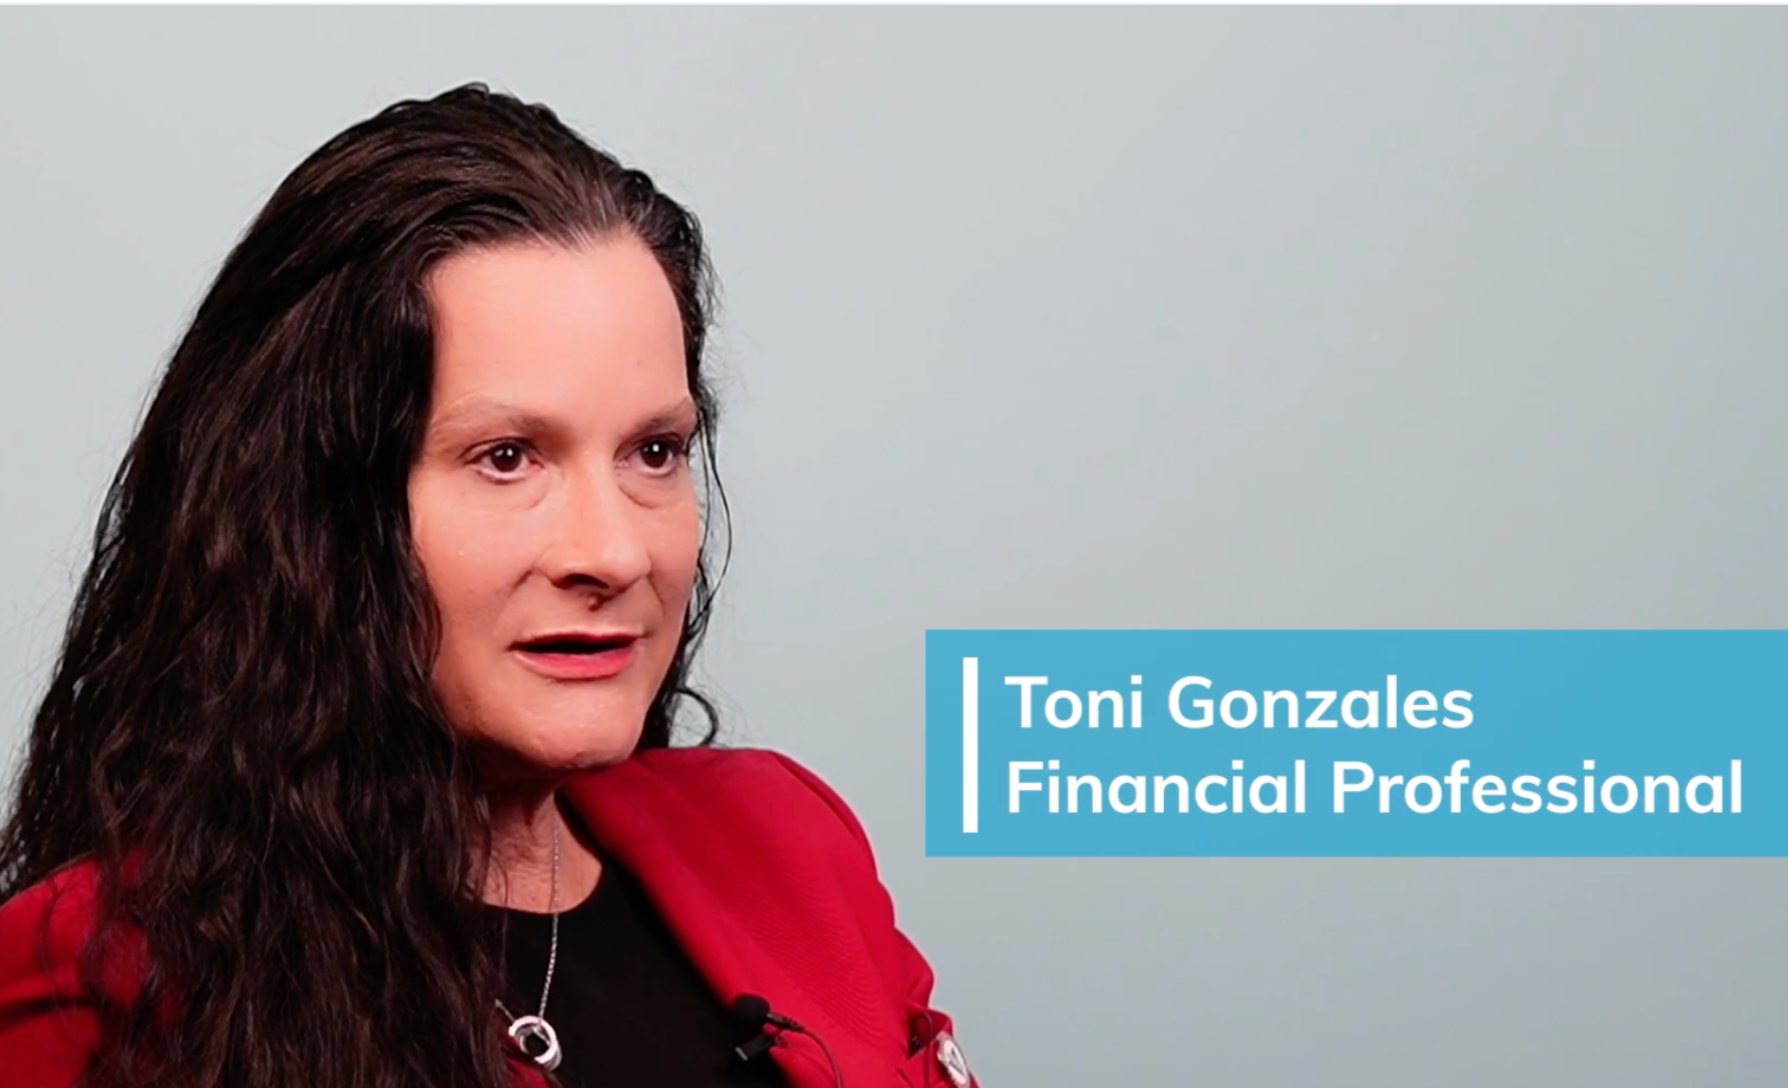 ToniGonzales_FinancialProfessional